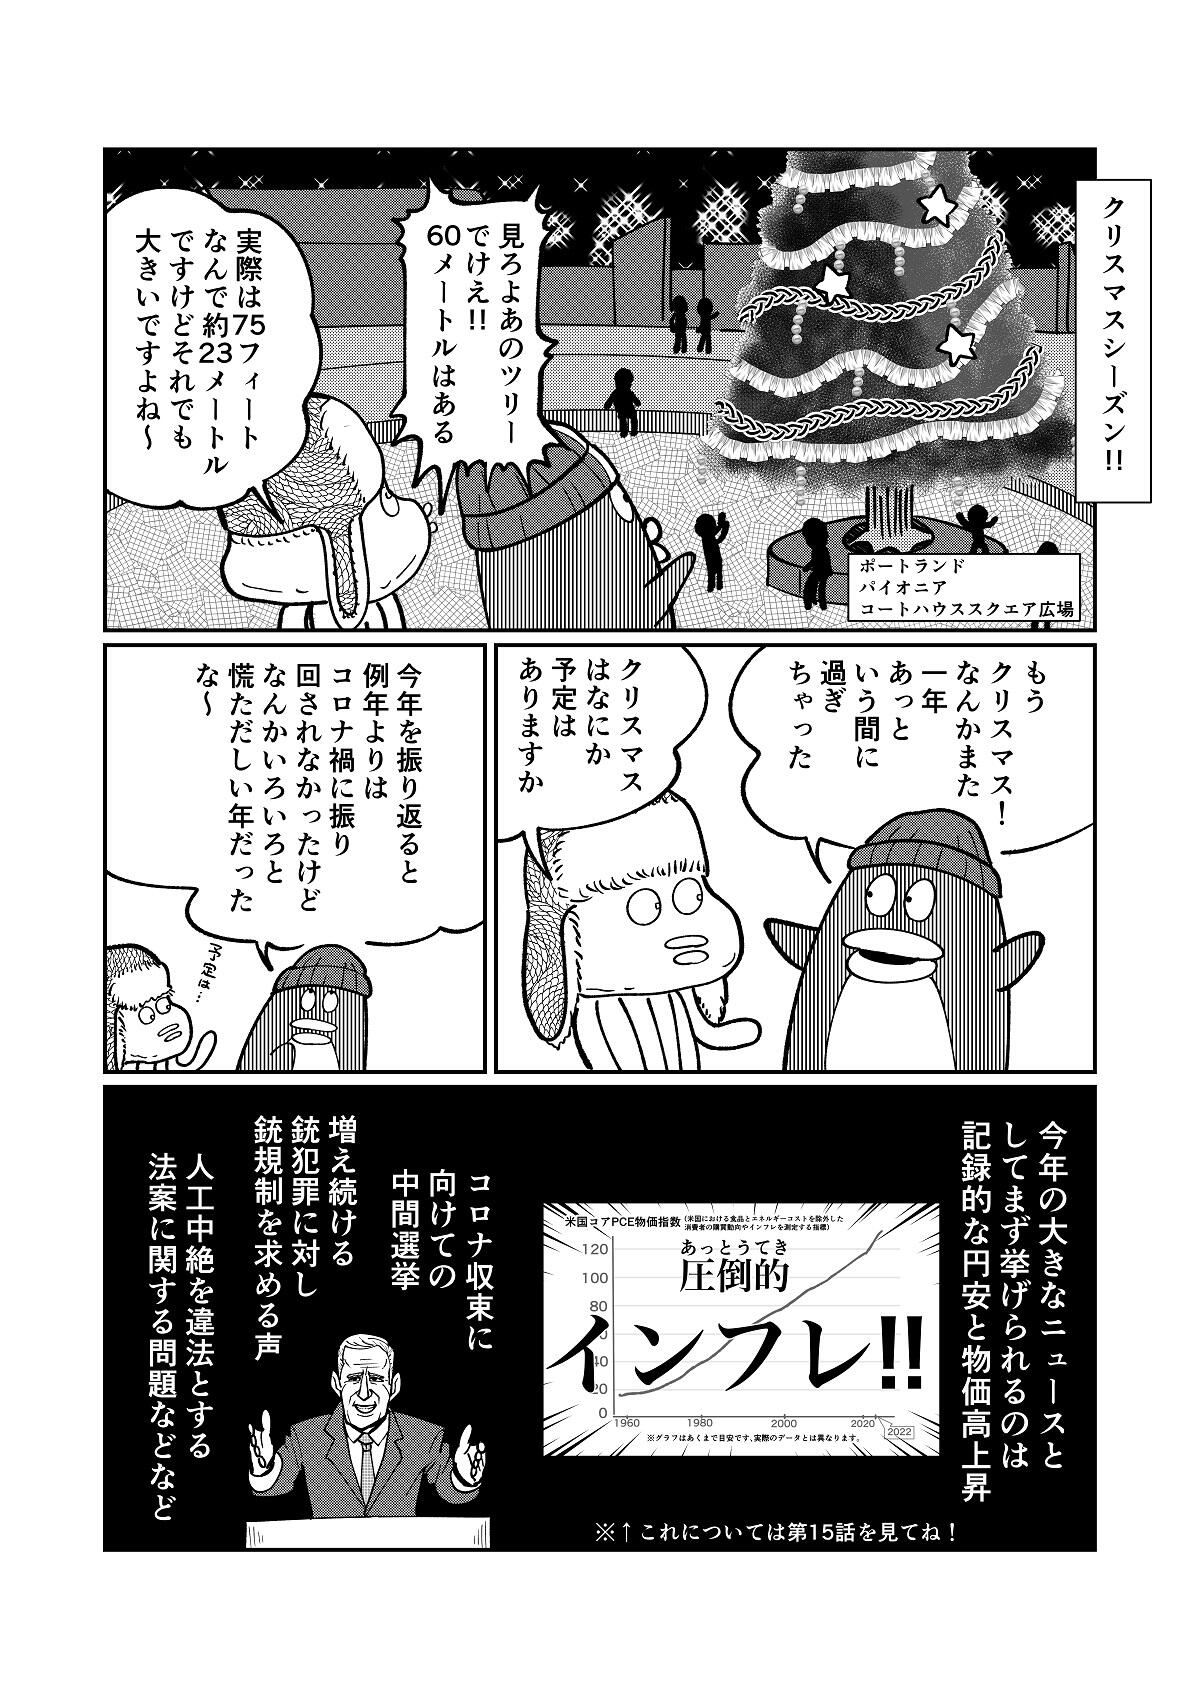 https://www.ryugaku.co.jp/column/images/jawamura17_2_1200.jpg